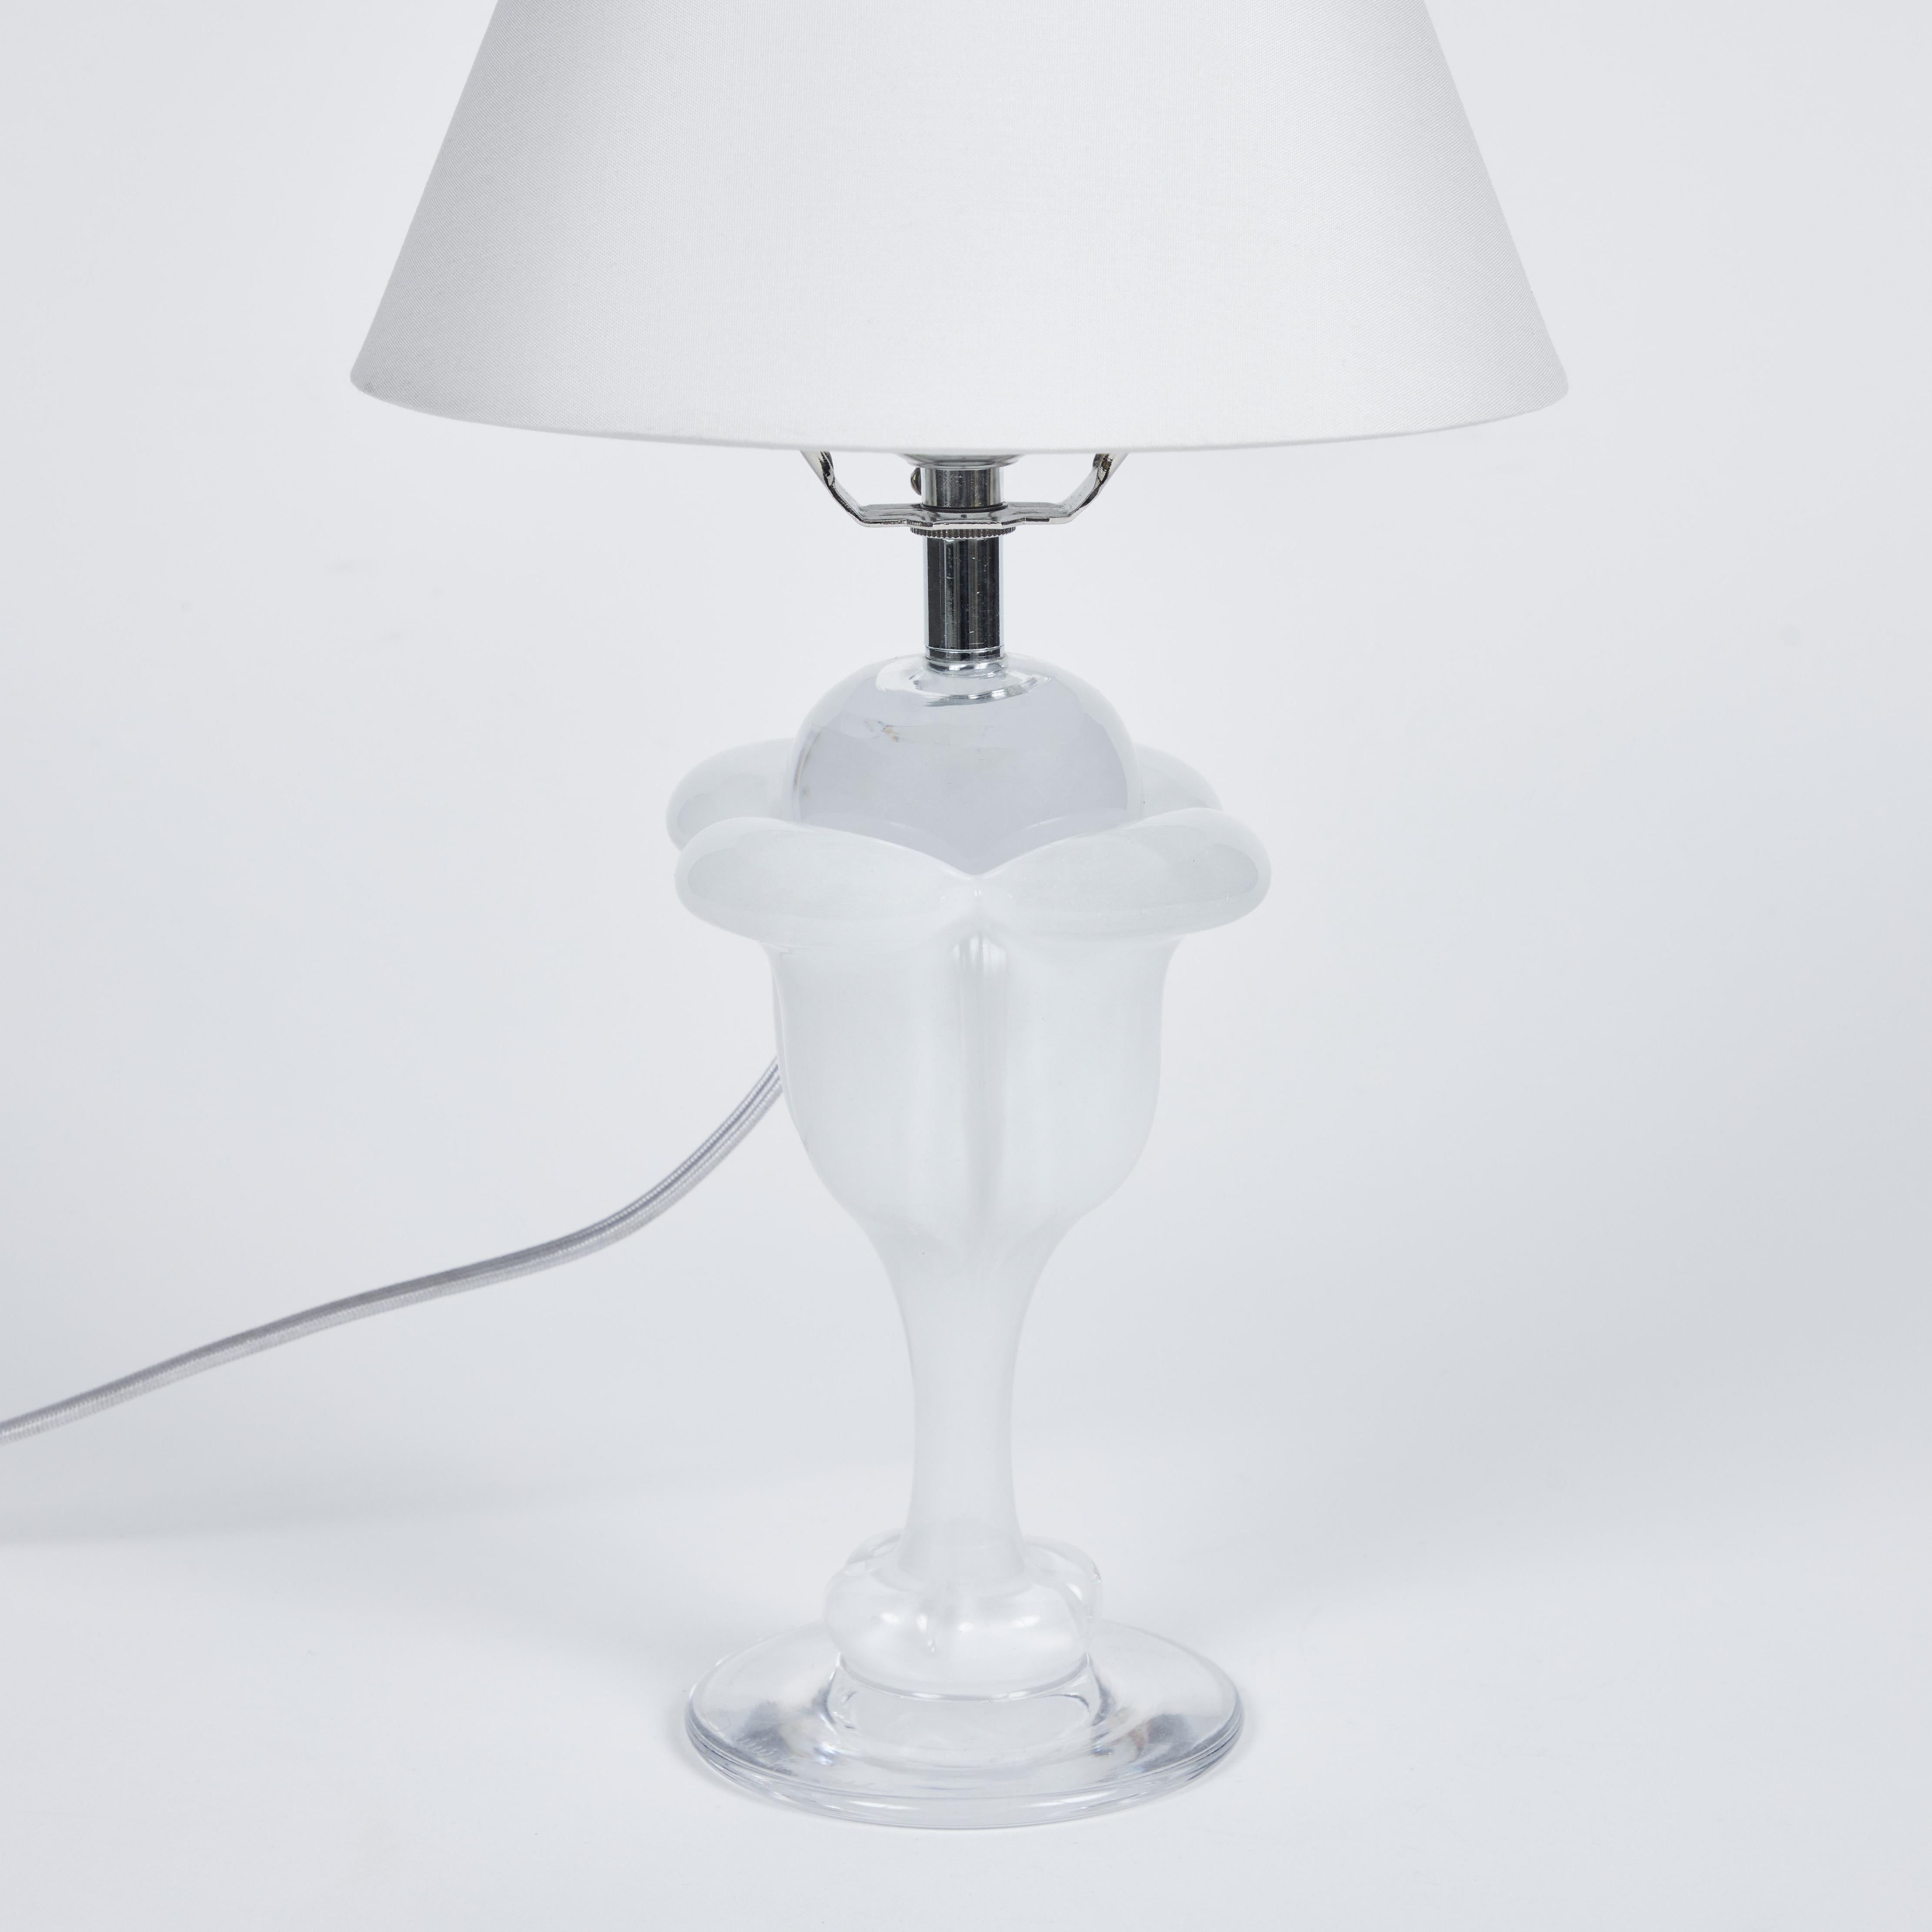 Vintage Hand Blown Daum Crystal Petite Table Lamps Pair For Sale 2